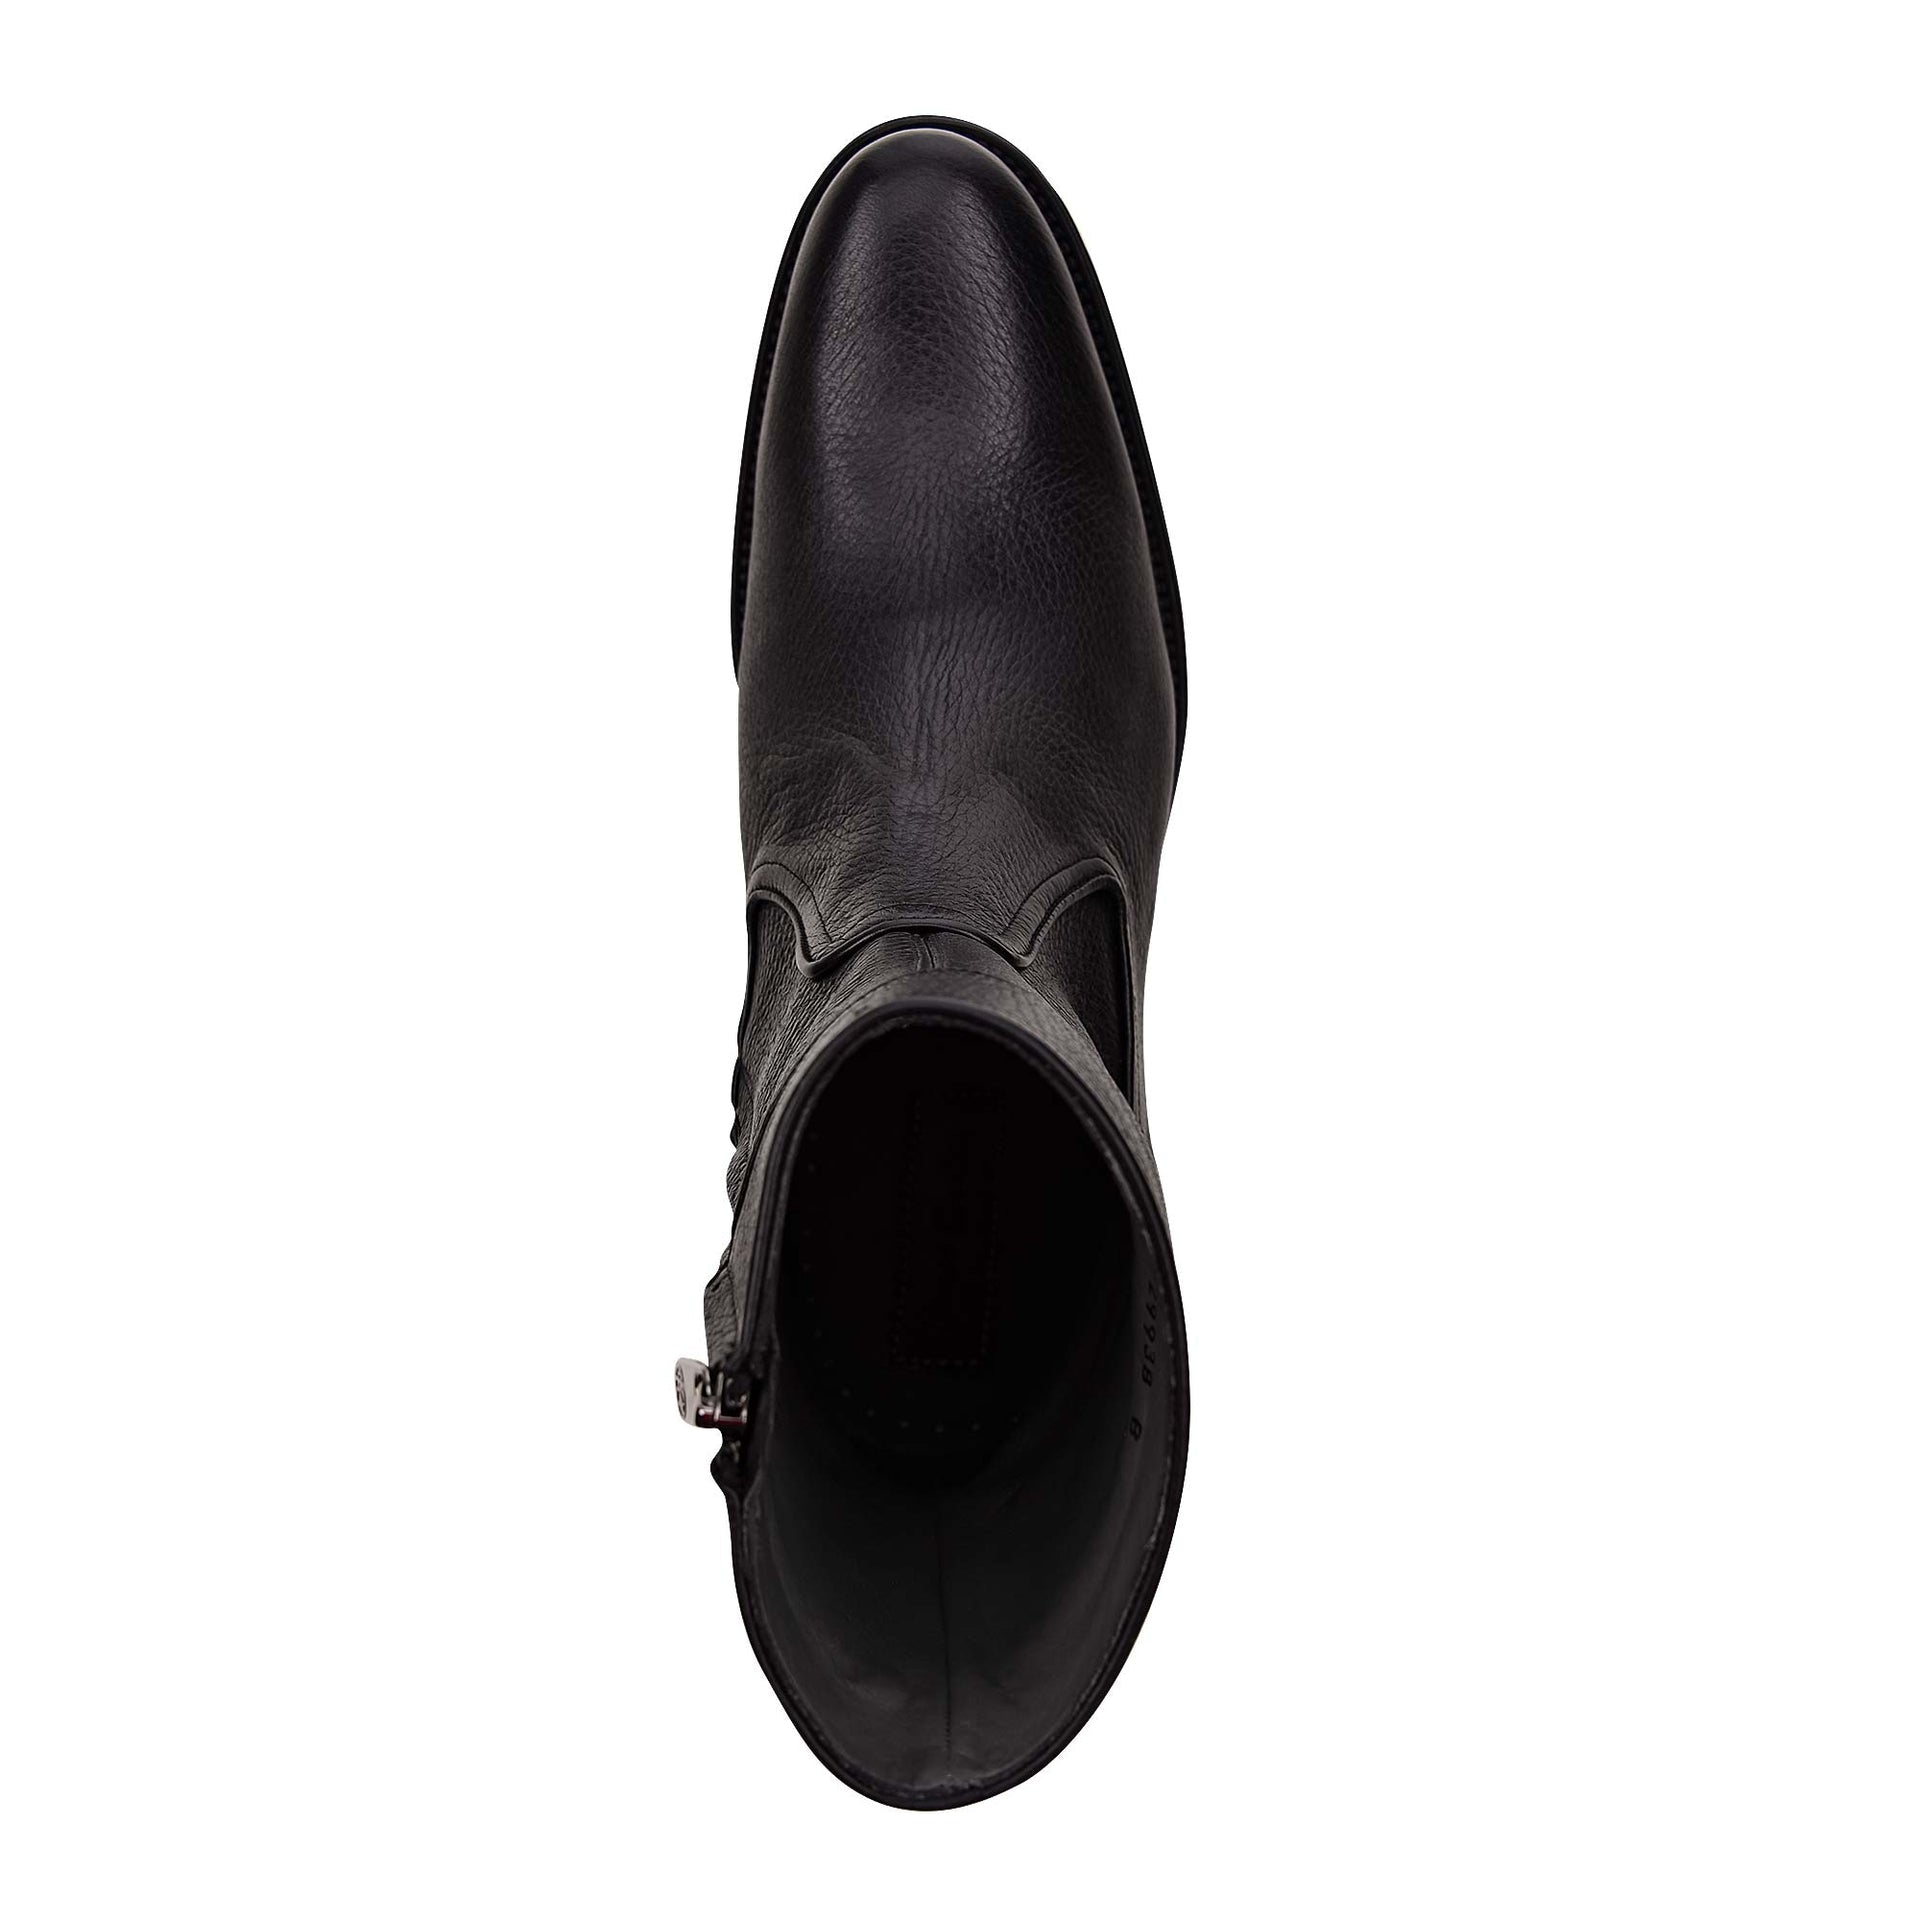 G08VNVN - Franco Cuadra black dress casual leather zip ankle boots for men-Kuet.us